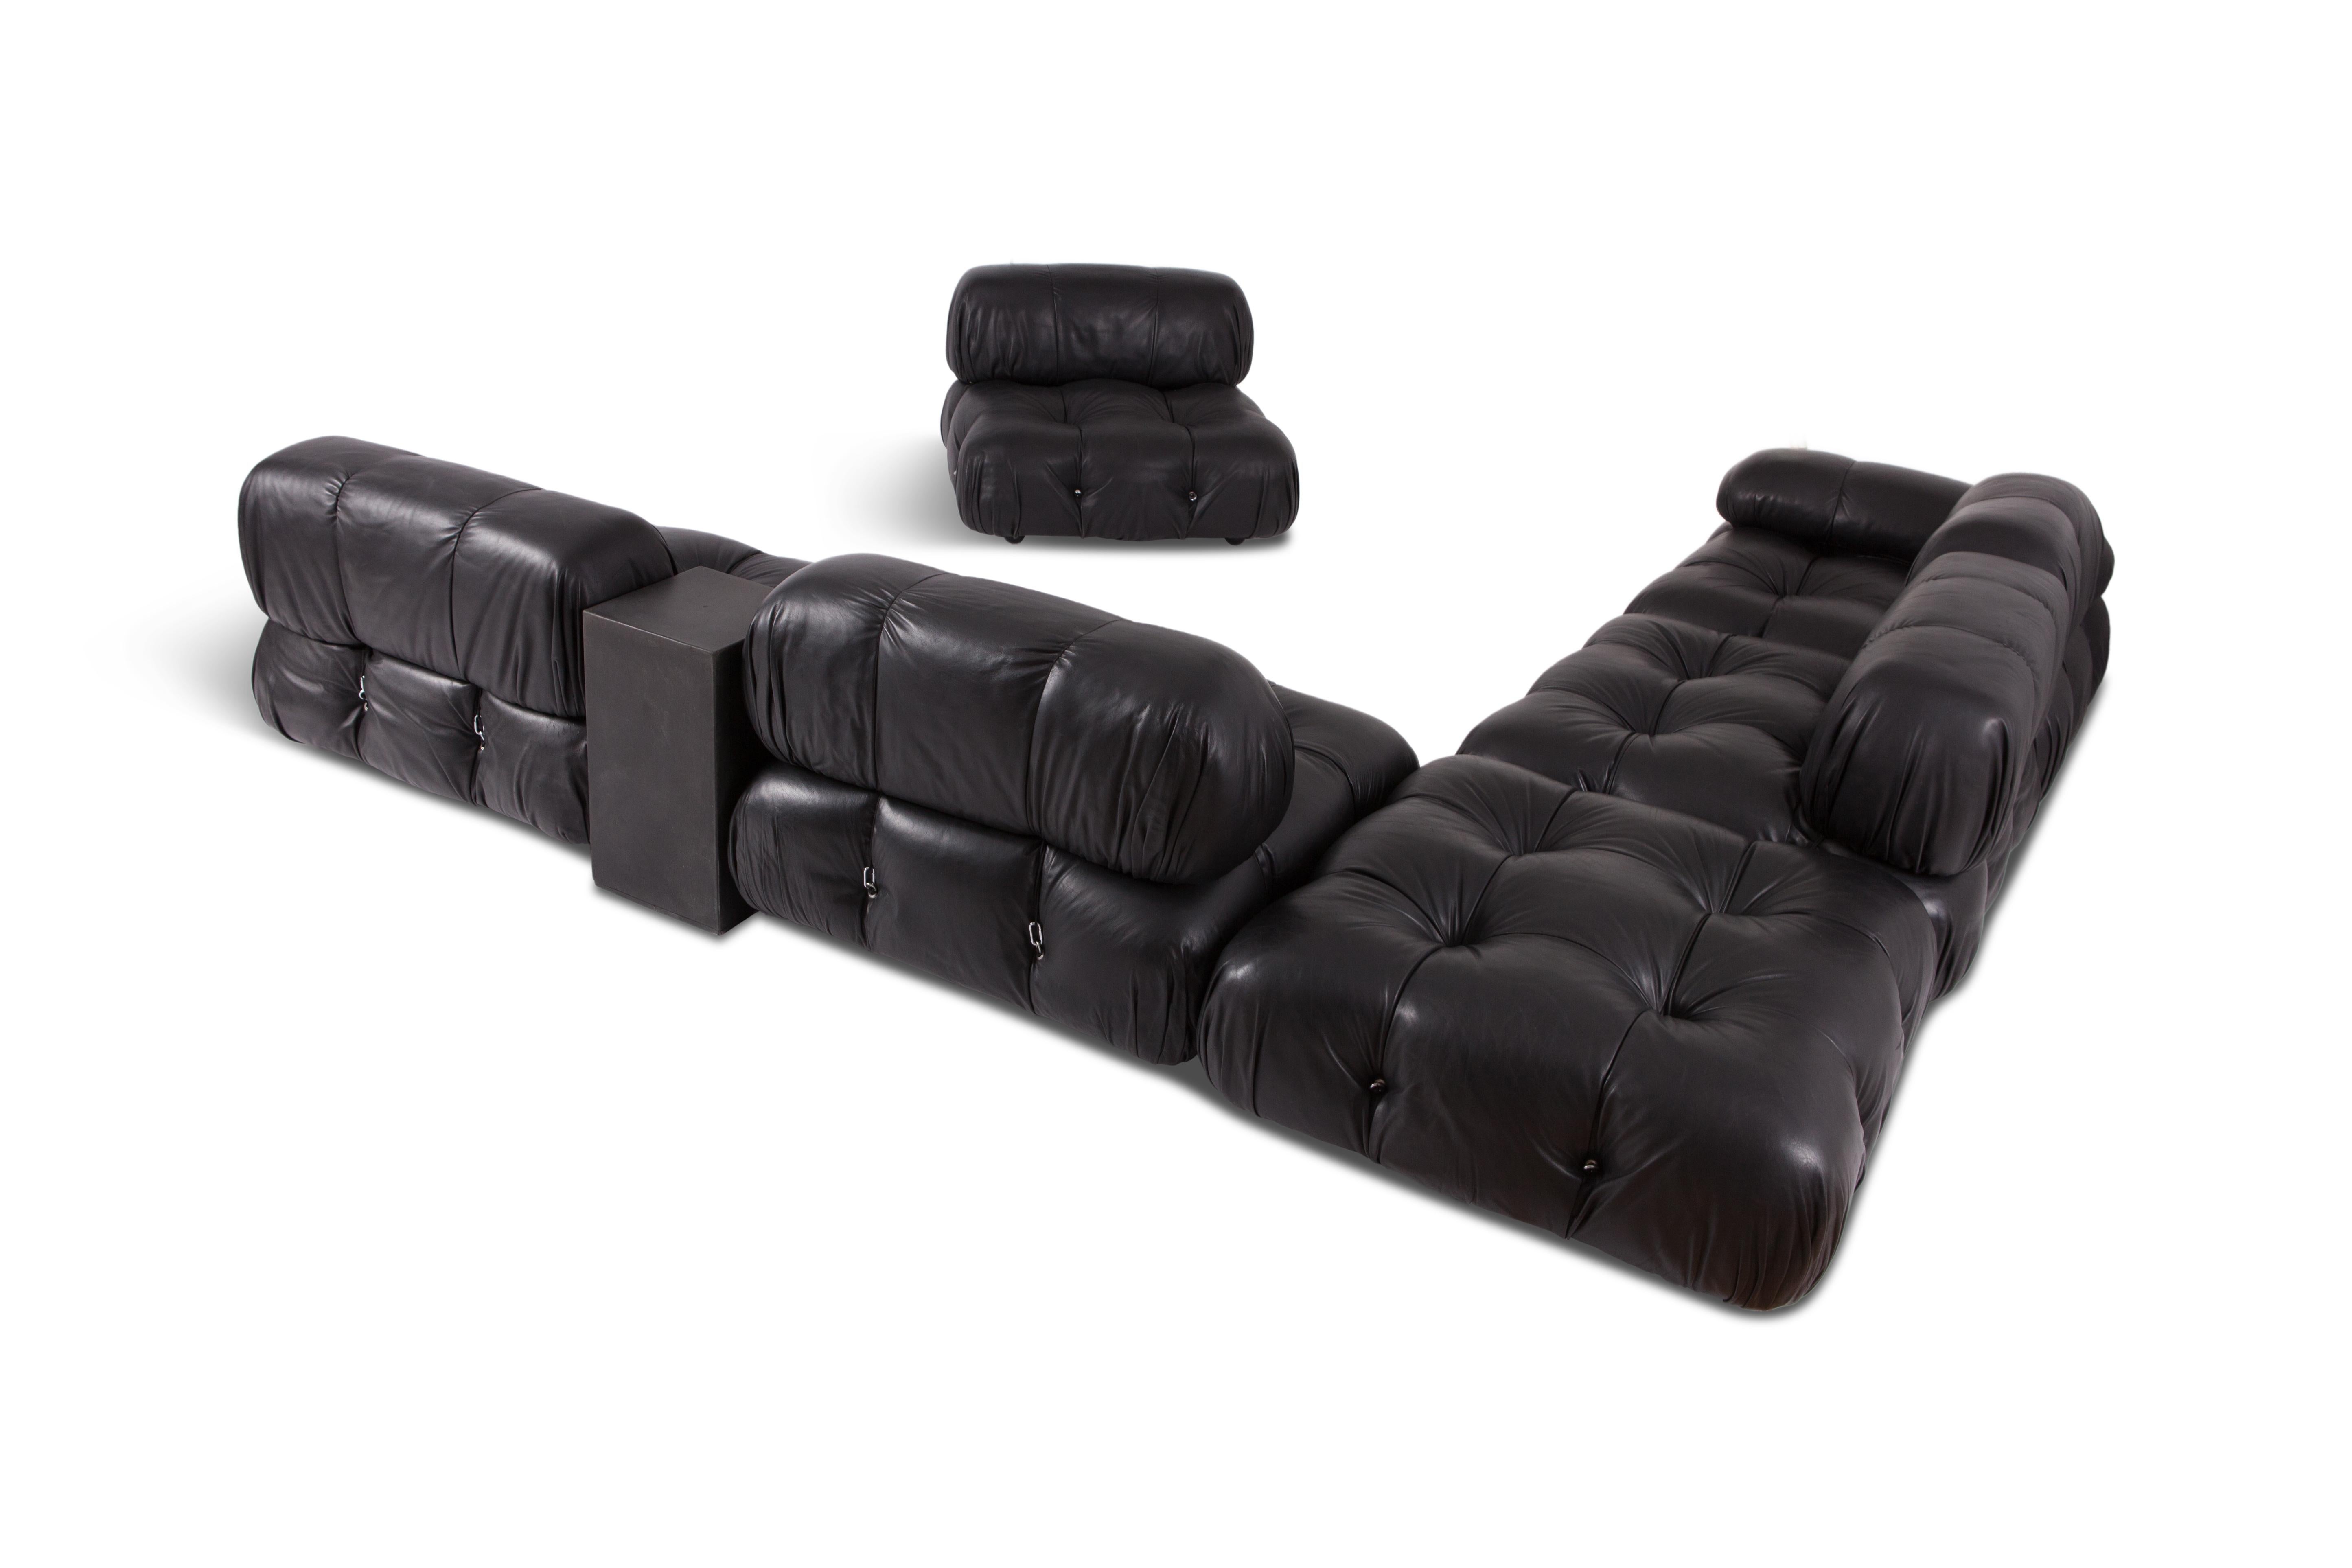 Camaleonda Modular Sofa in Black Leather by Mario Bellini 4